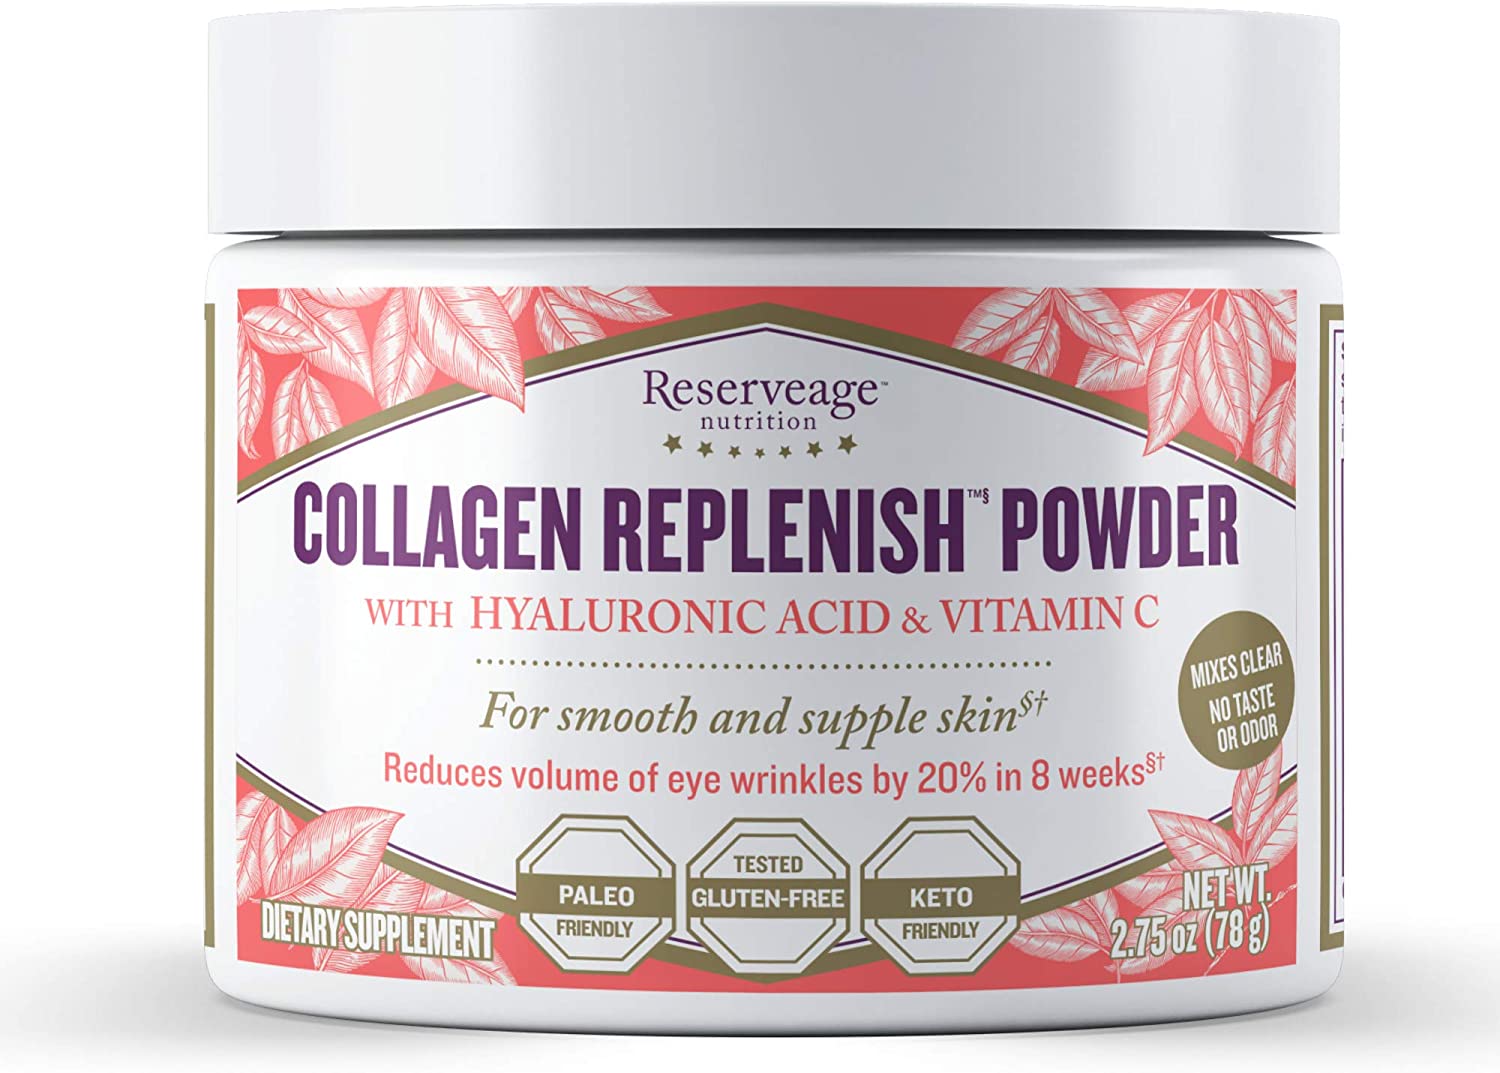 6 Best Collagen Supplements for Better Skin in 2022 - DailyHealthTips